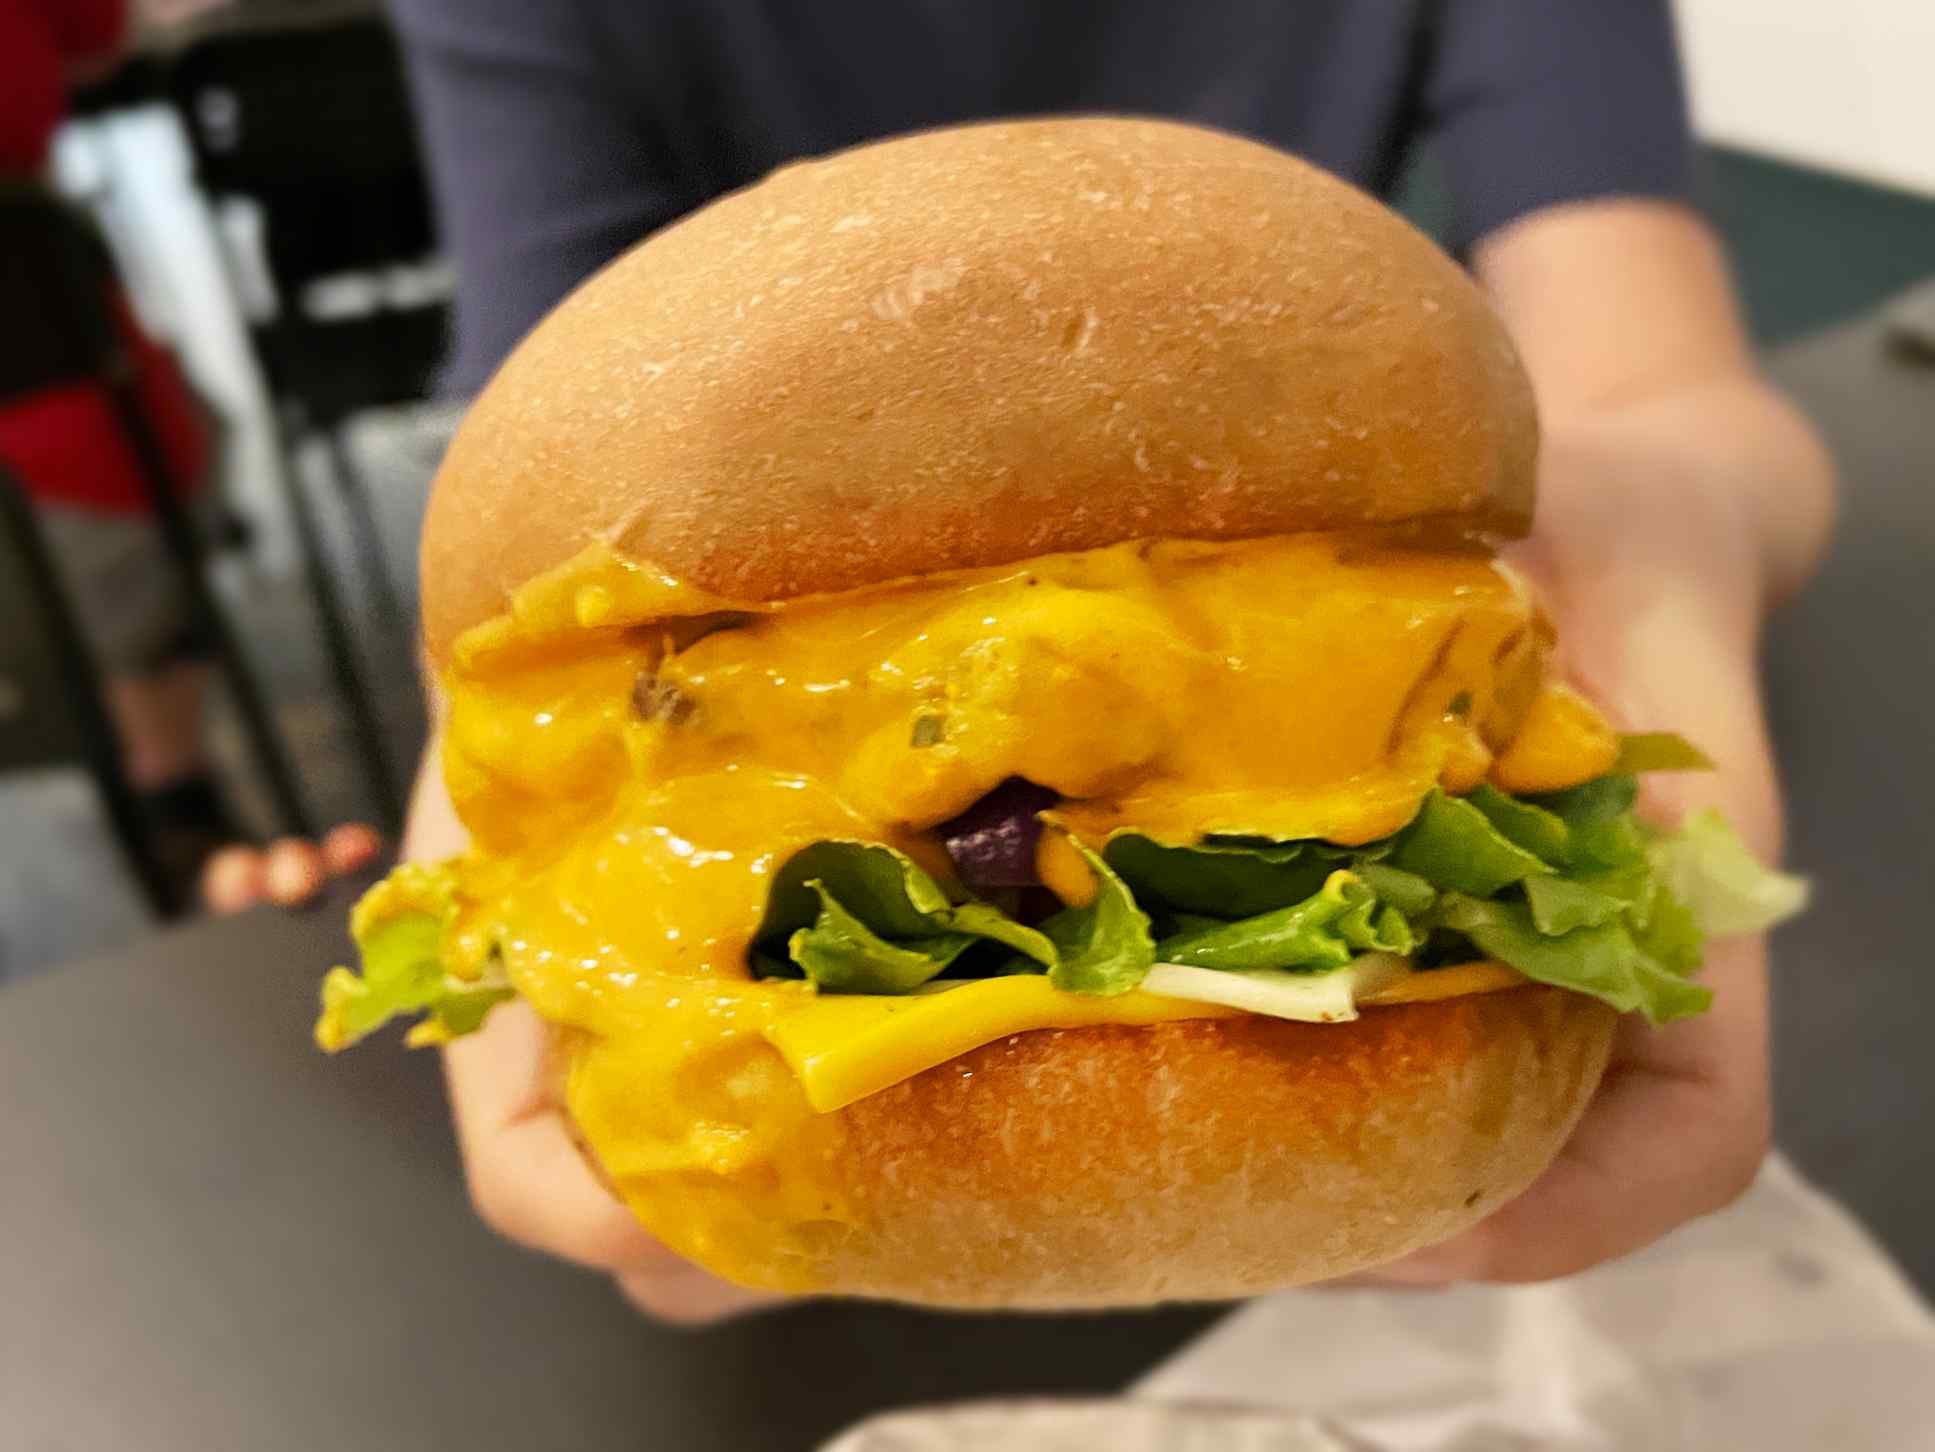 burger yellow, burger yellow 菜單, 台北車站美食, 鹿肉漢堡